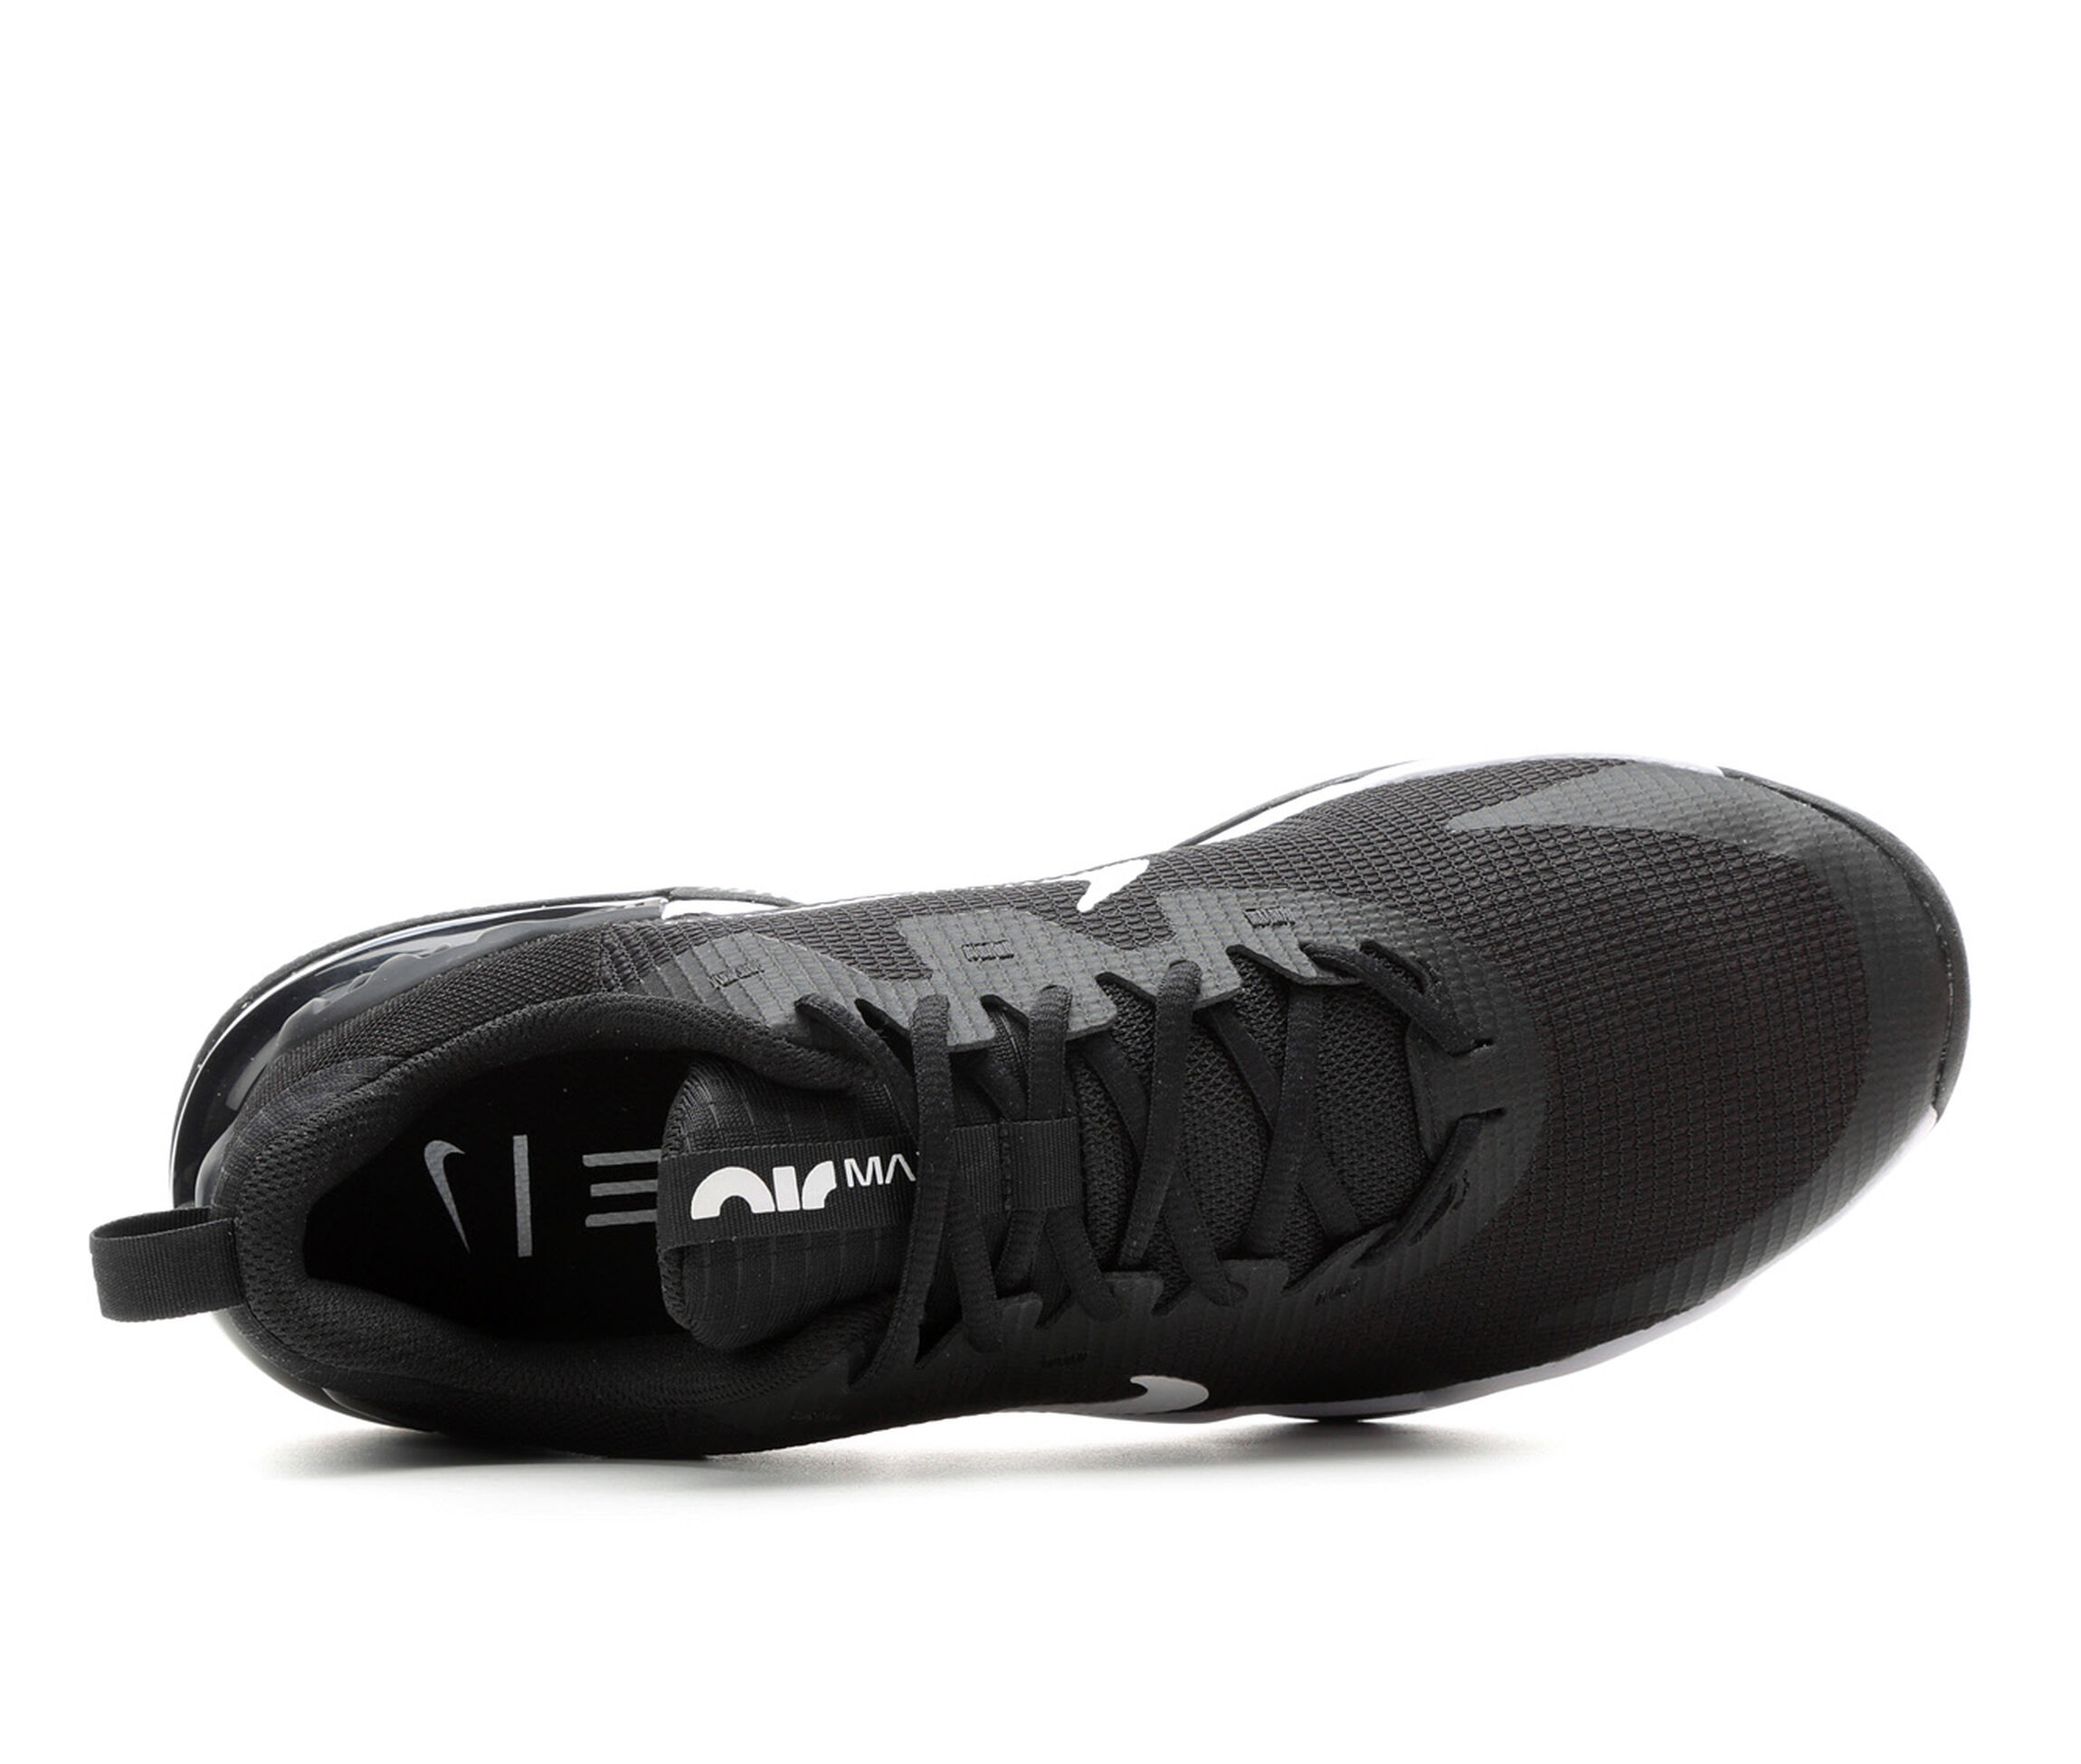 Men's Nike Athletic nike exercise shoes Shoes | Shoe Carnival